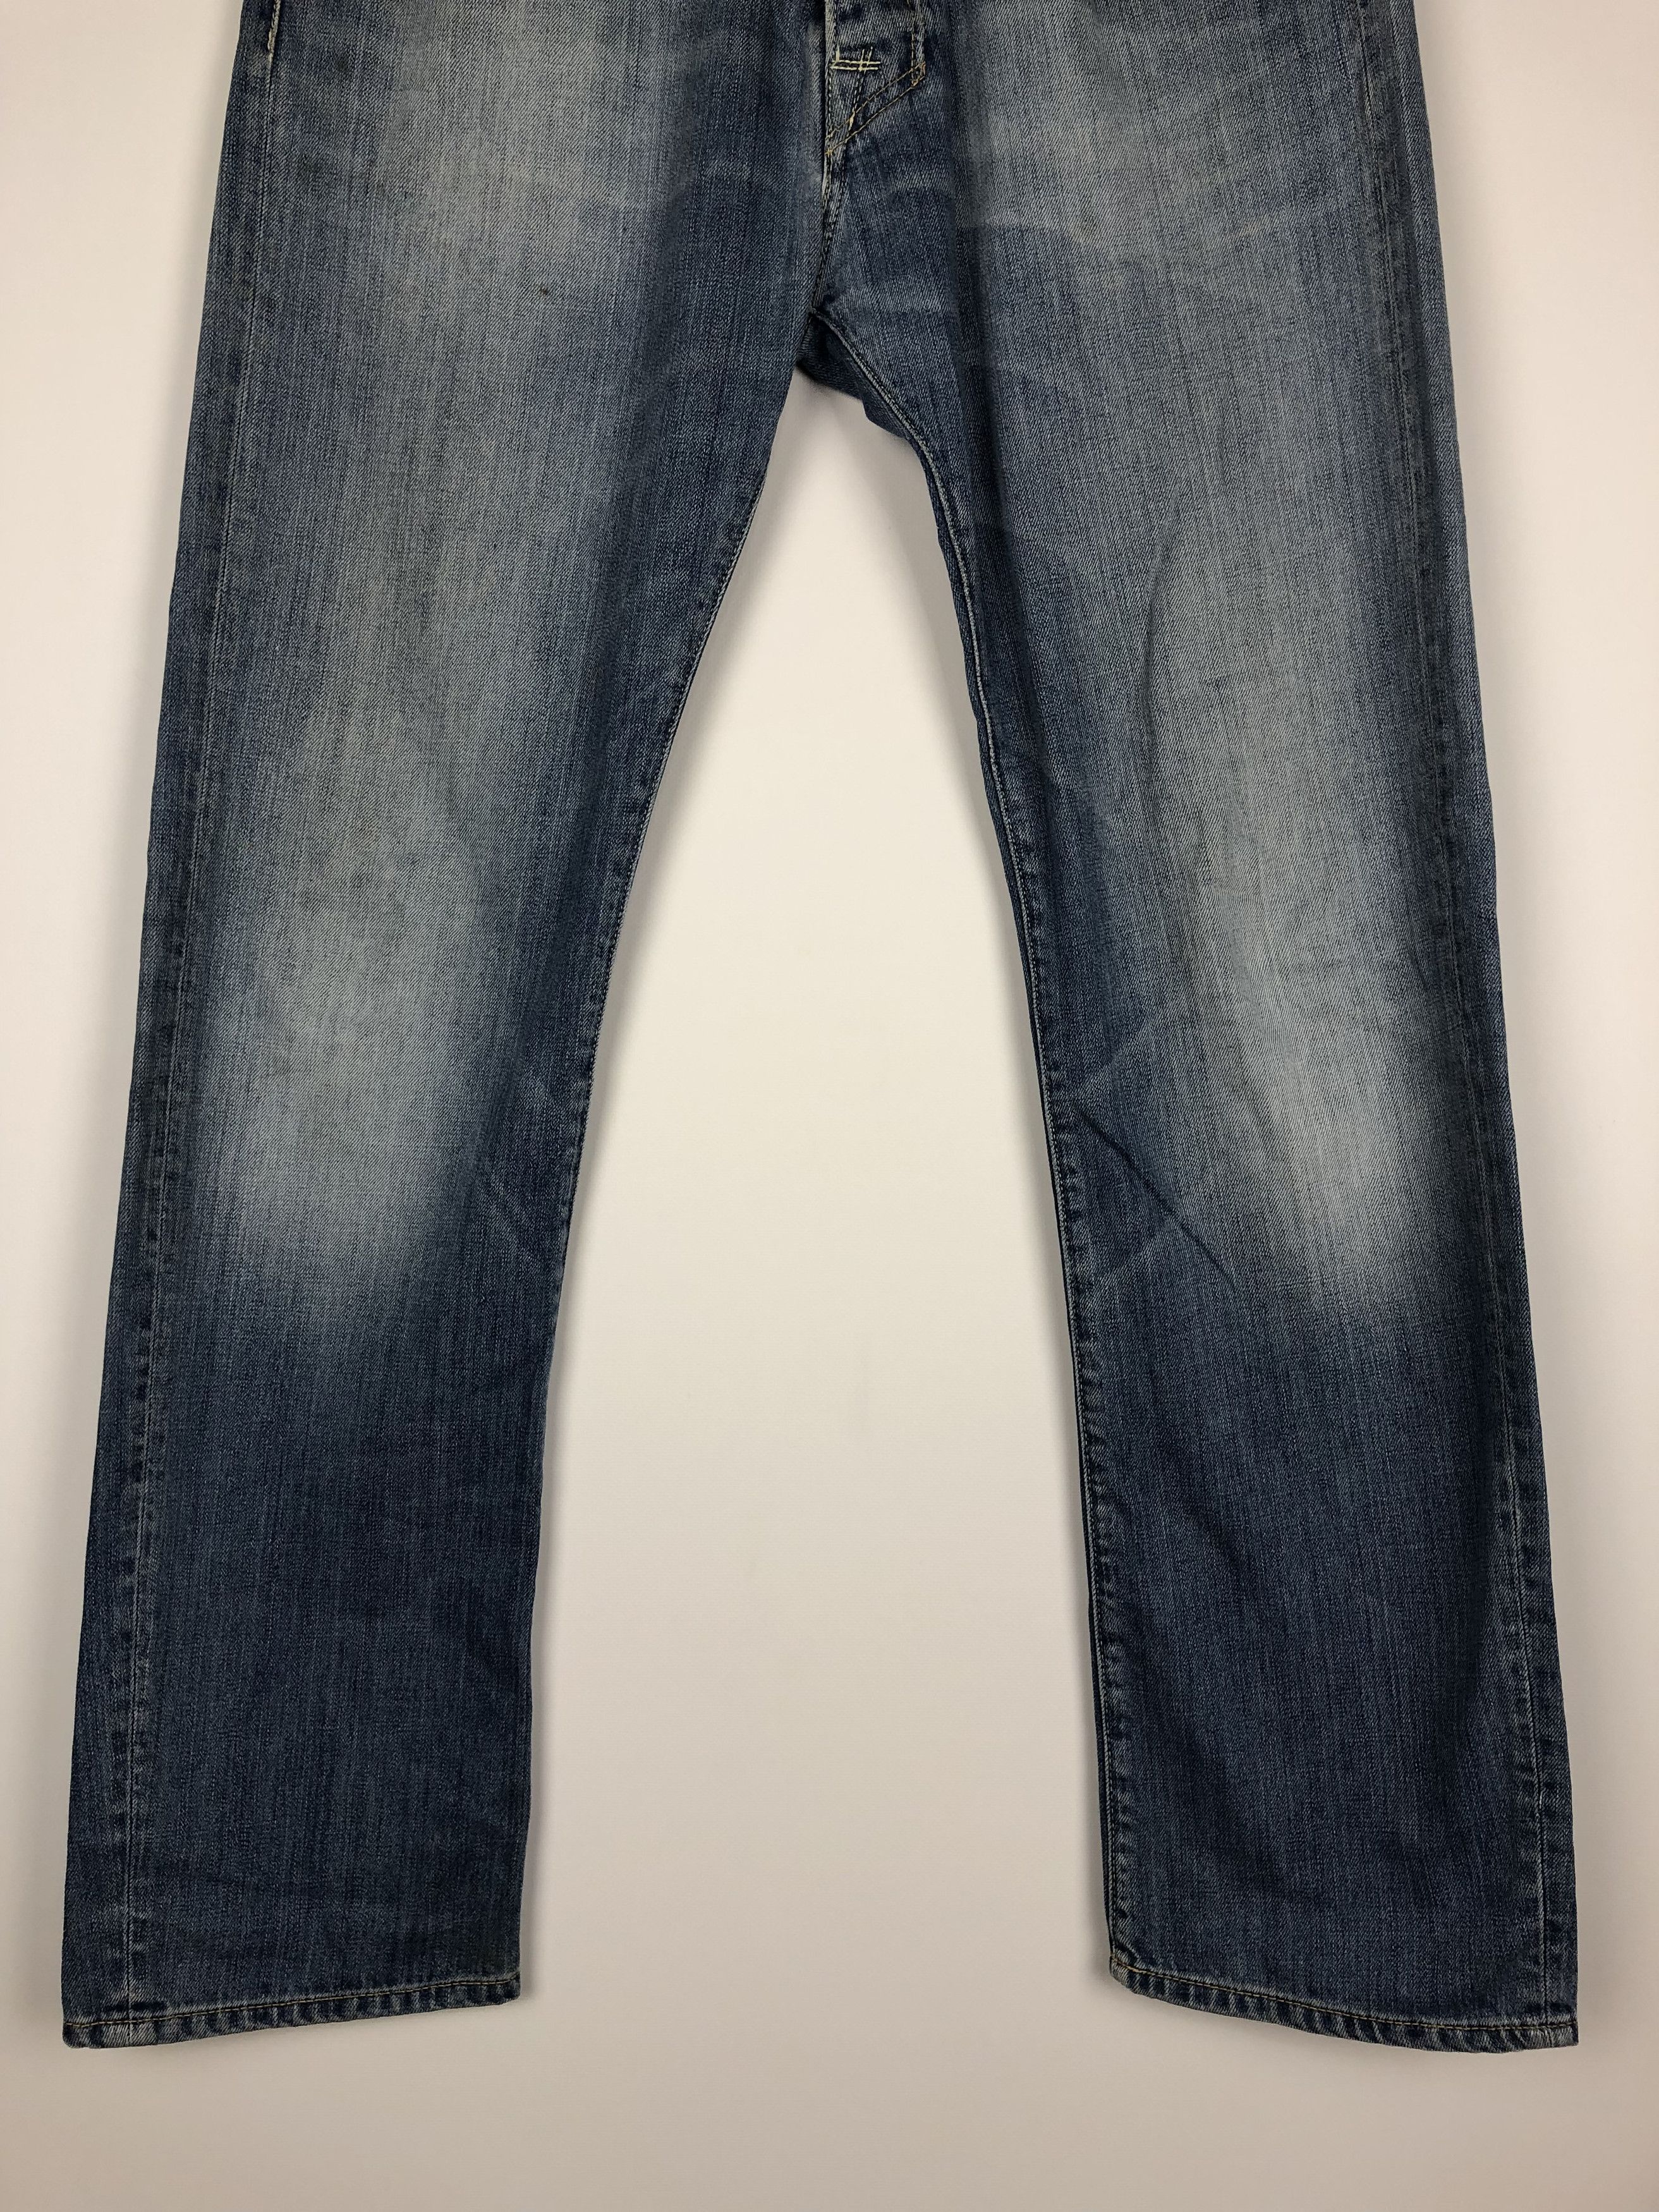 Vintage REPLAY Denim Jeans Pants Franky Vintage Trousers size 32x30 Size US 32 / EU 48 - 3 Thumbnail